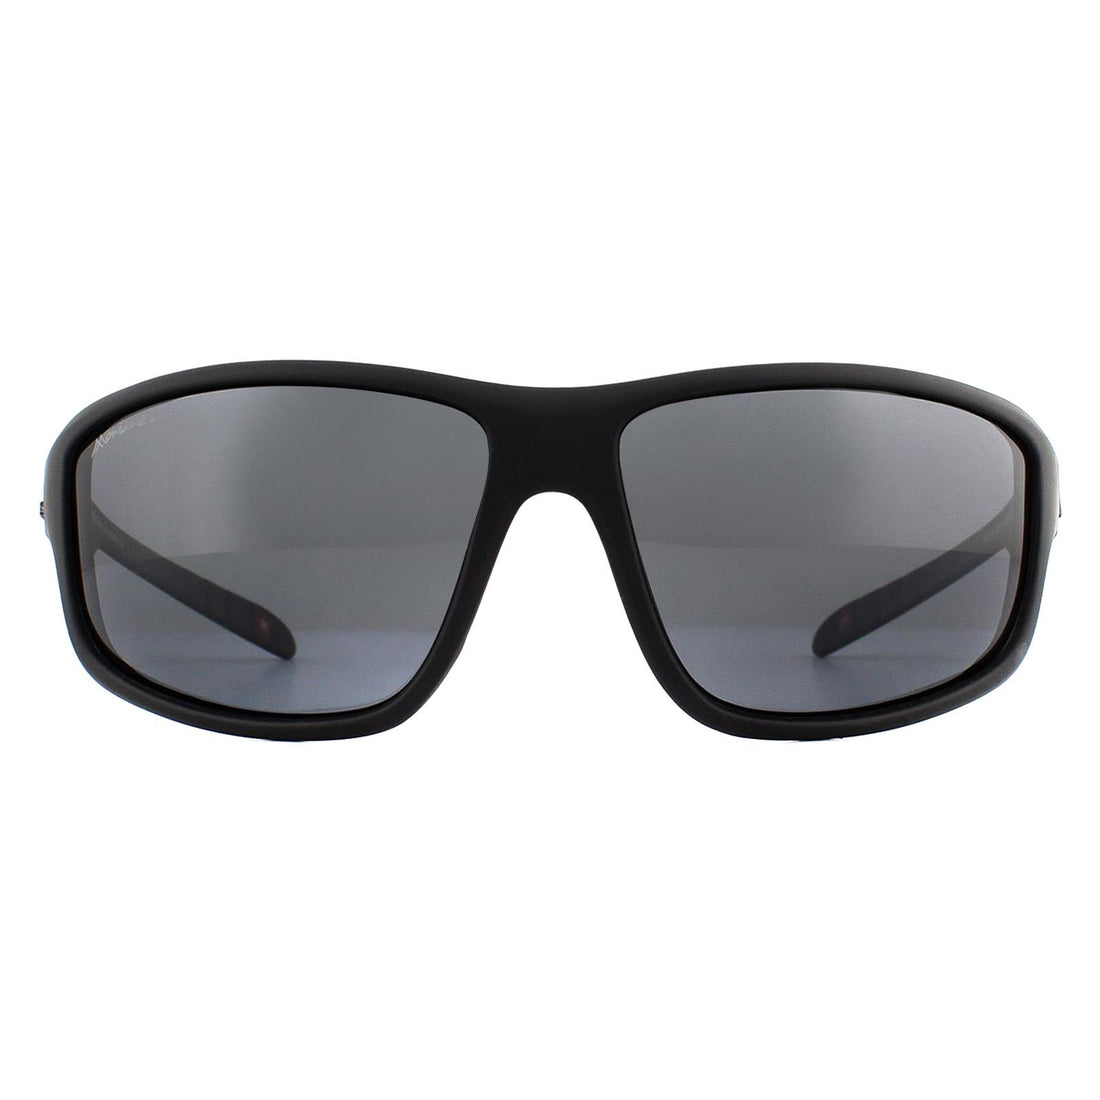 Montana SP313 Sunglasses Black Rubber / Smoke Polarized